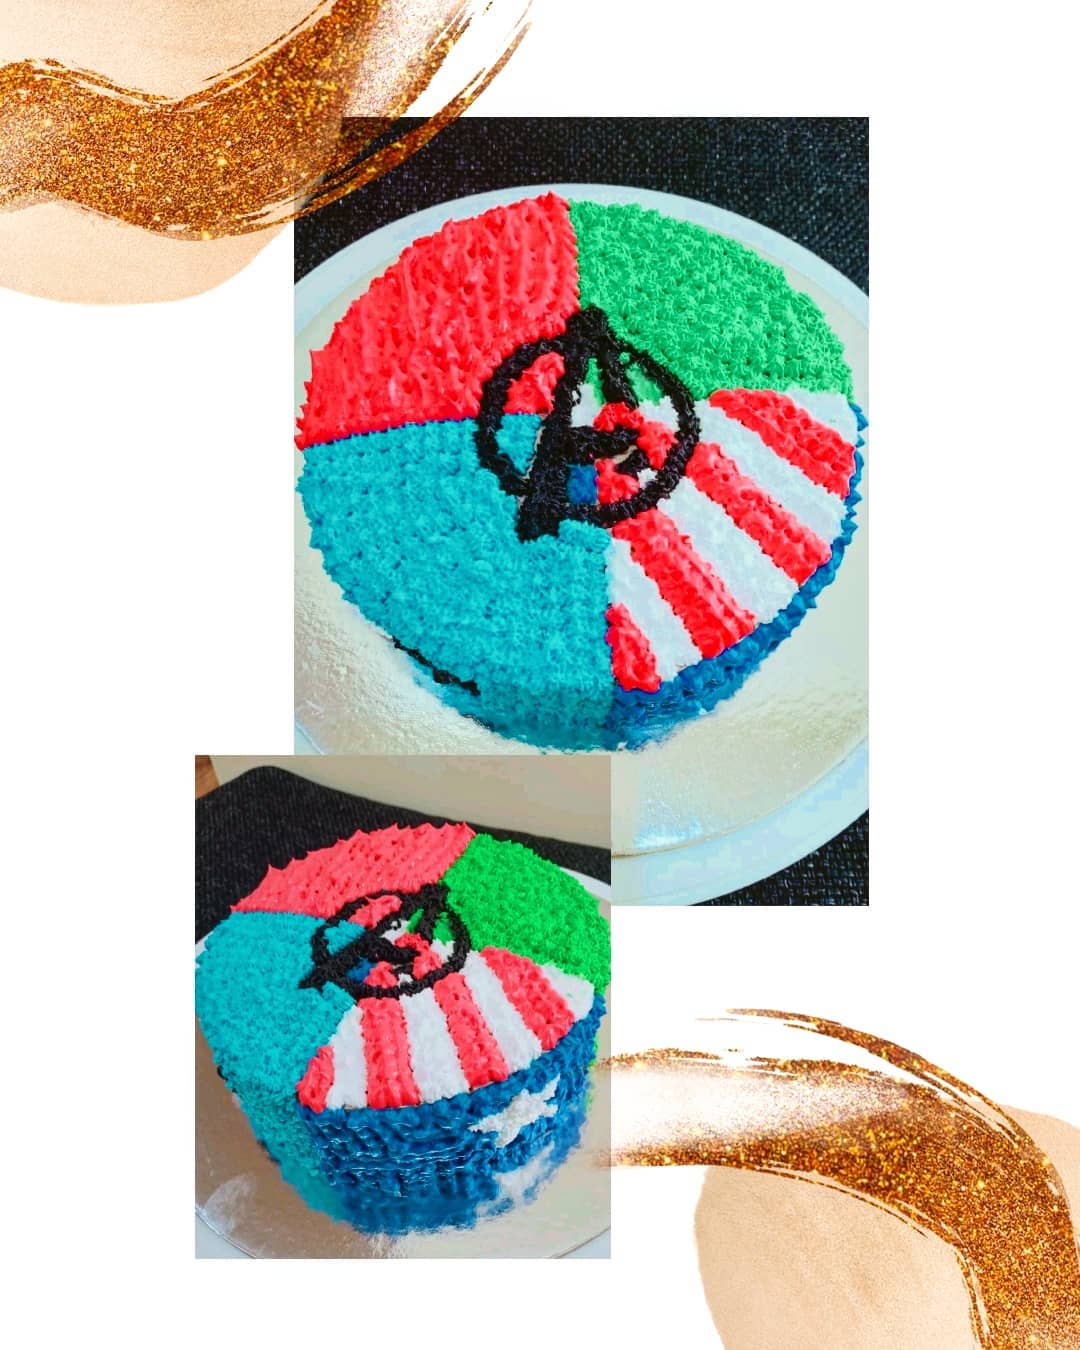 Avenger Cake Designs, Images, Price Near Me